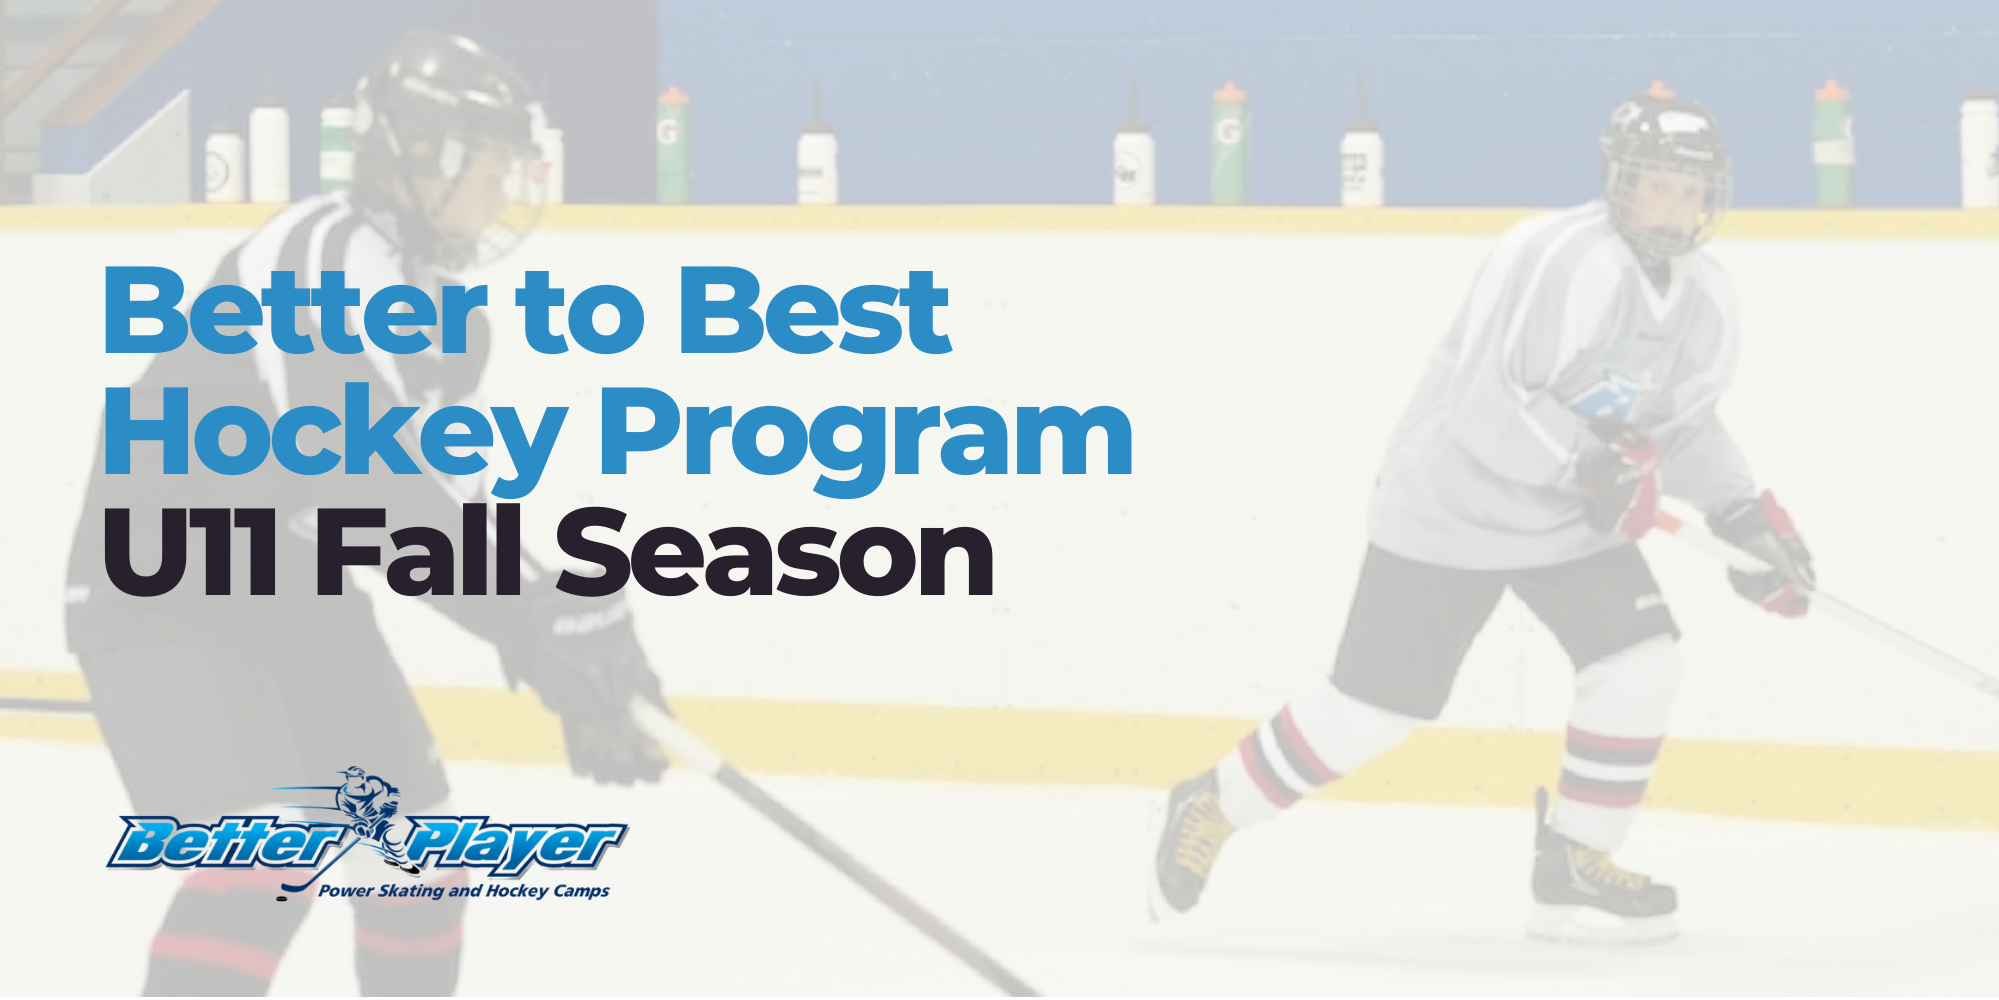 U11 Fall Season | Better to Best Hockey Program